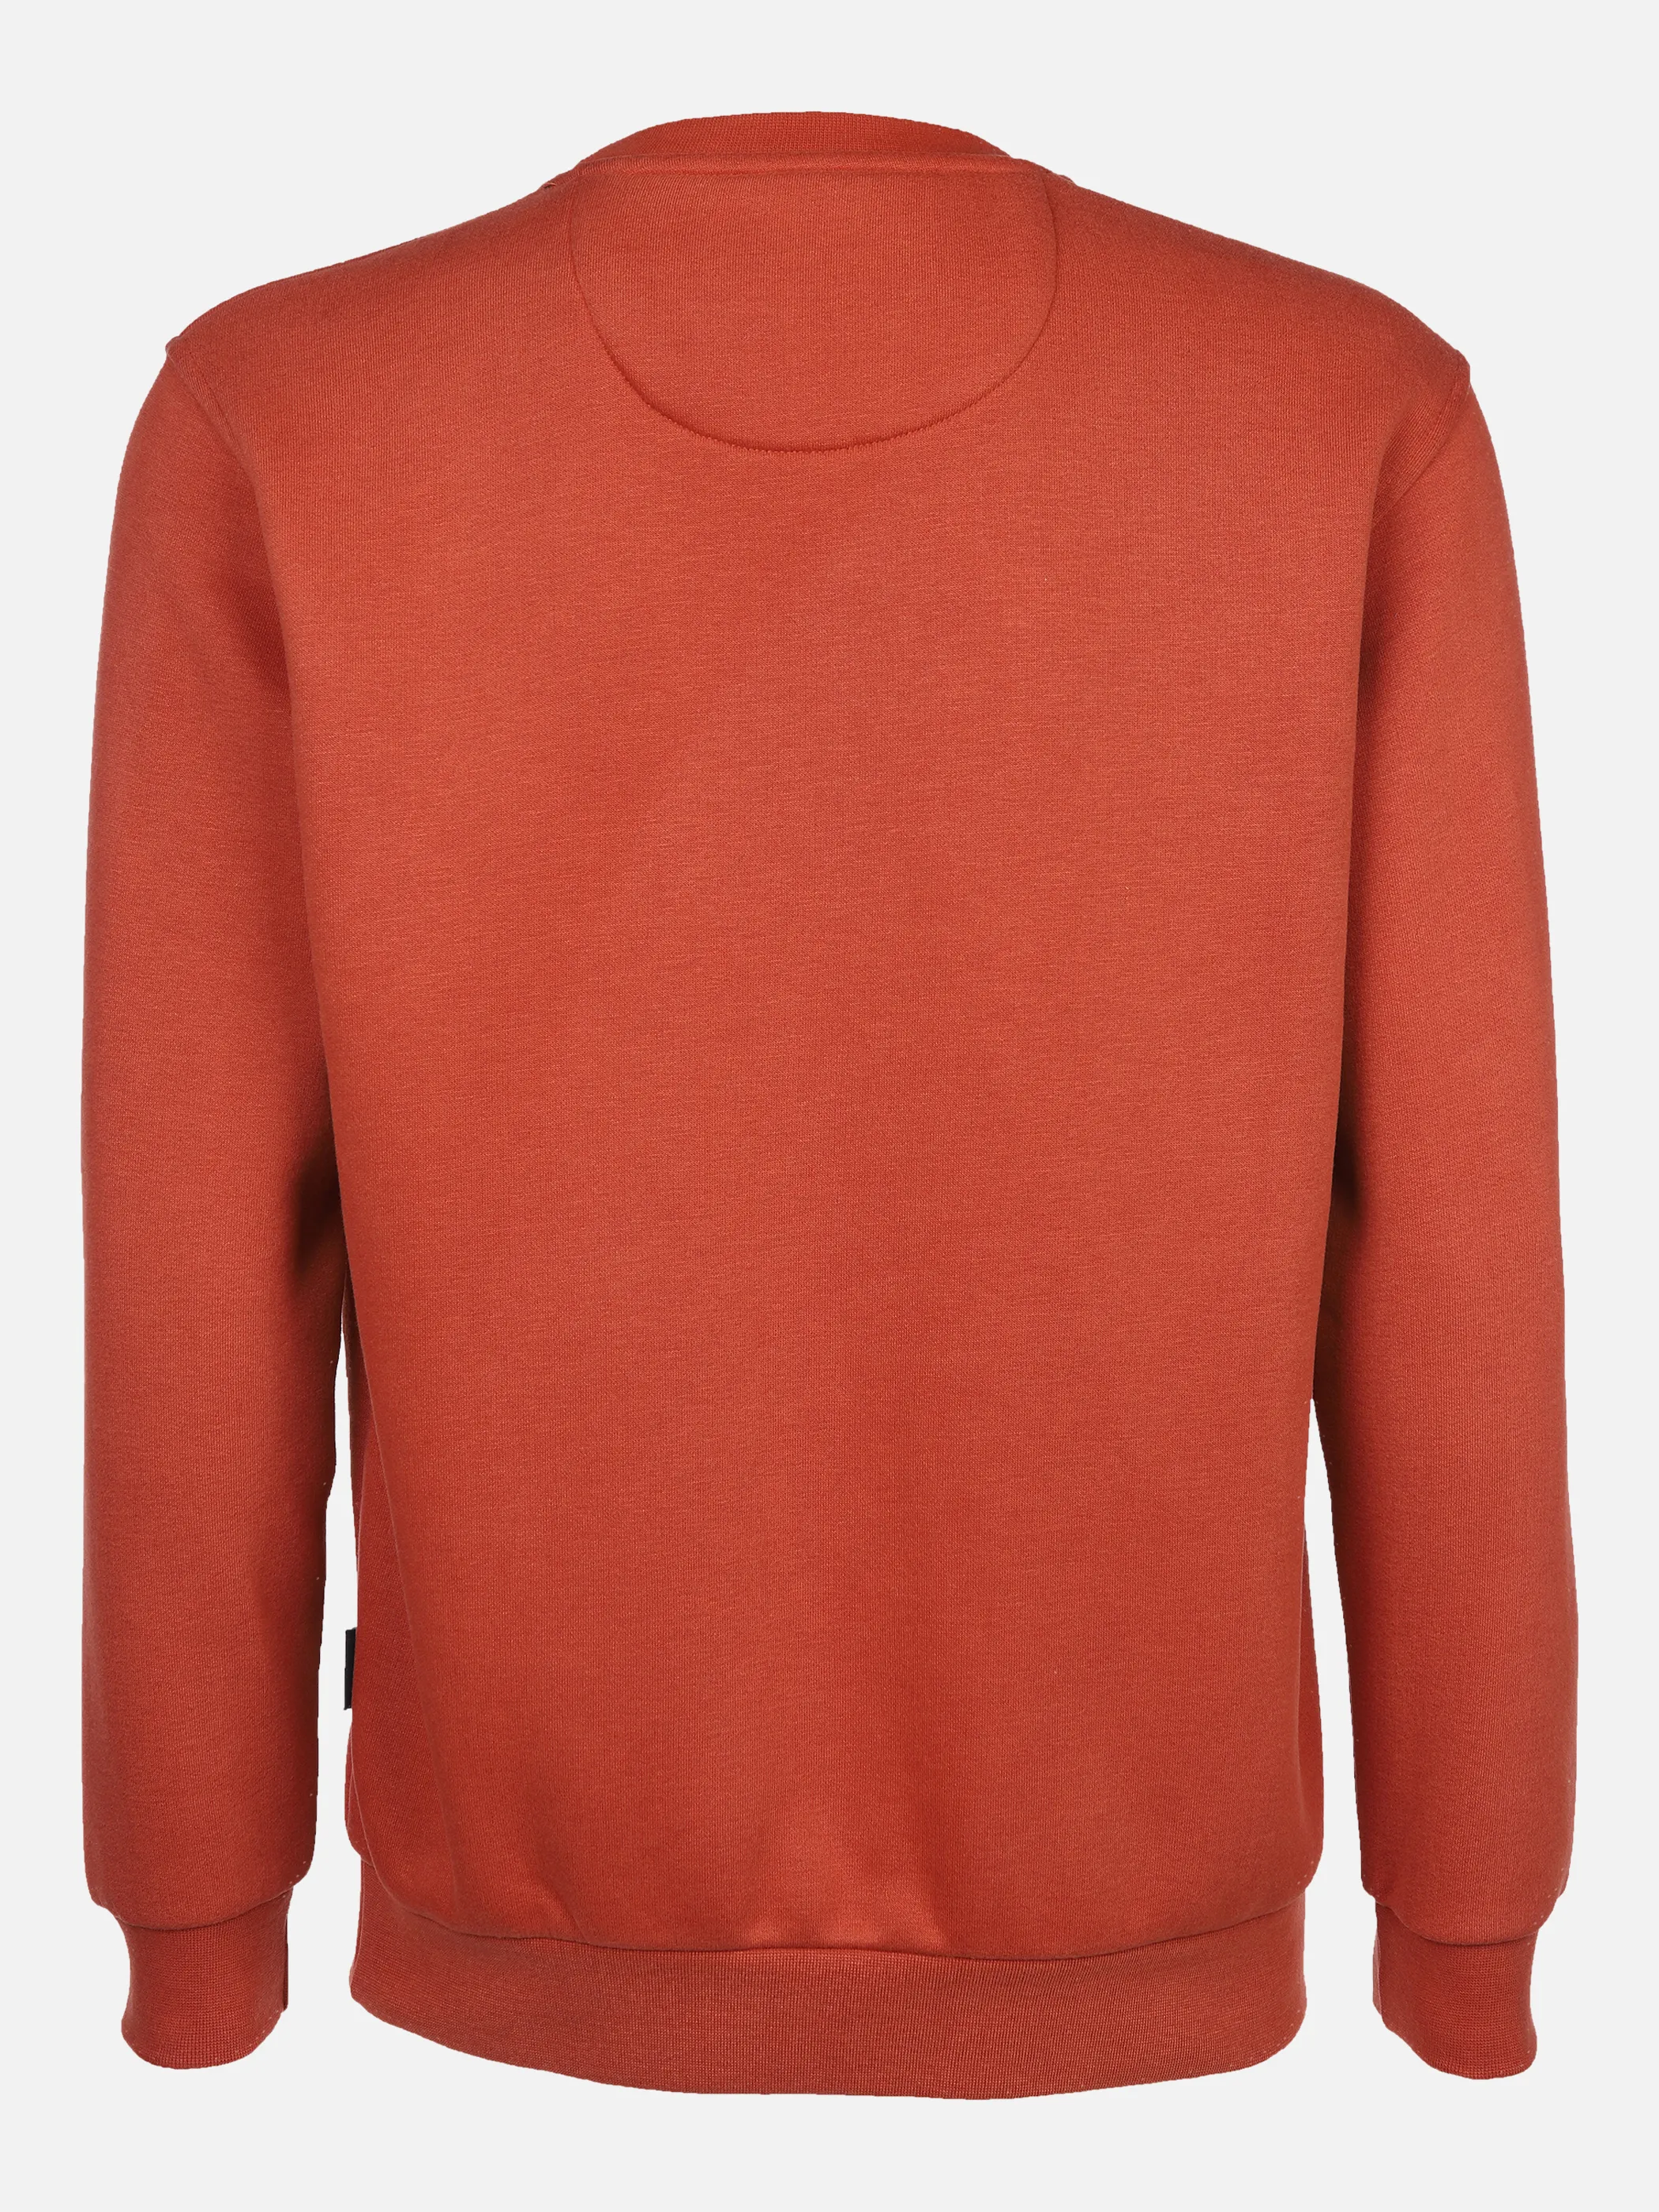 Jim Spencer He. Sweatshirt uni basic Orange 870104 ORANGE 2